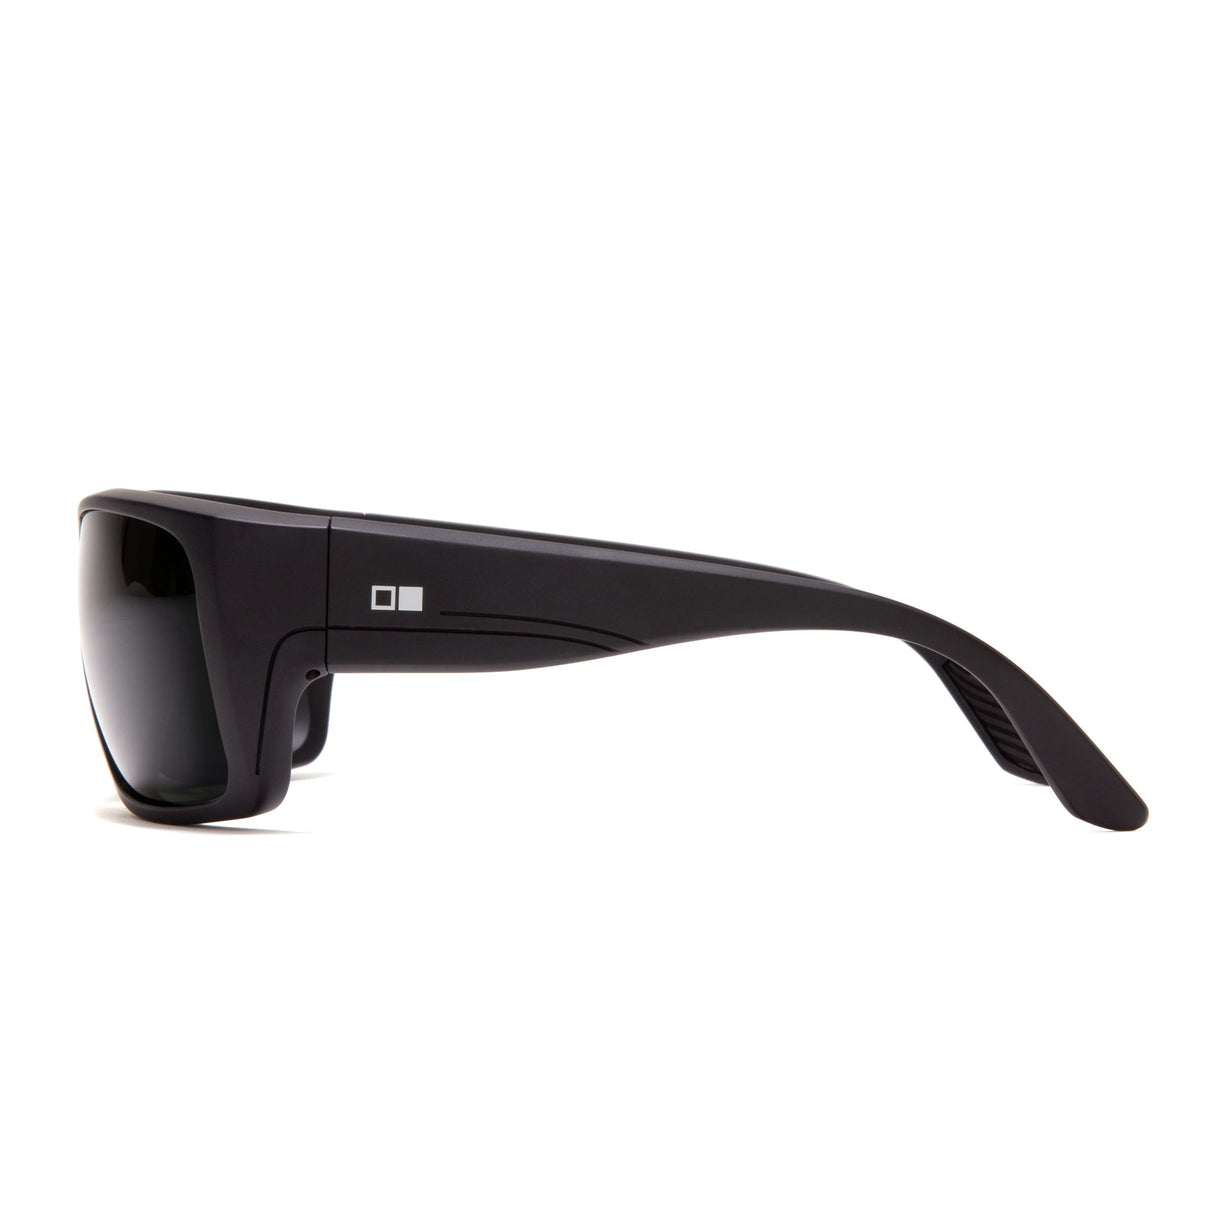 OTIS Coastin Sunglasses - Polarised